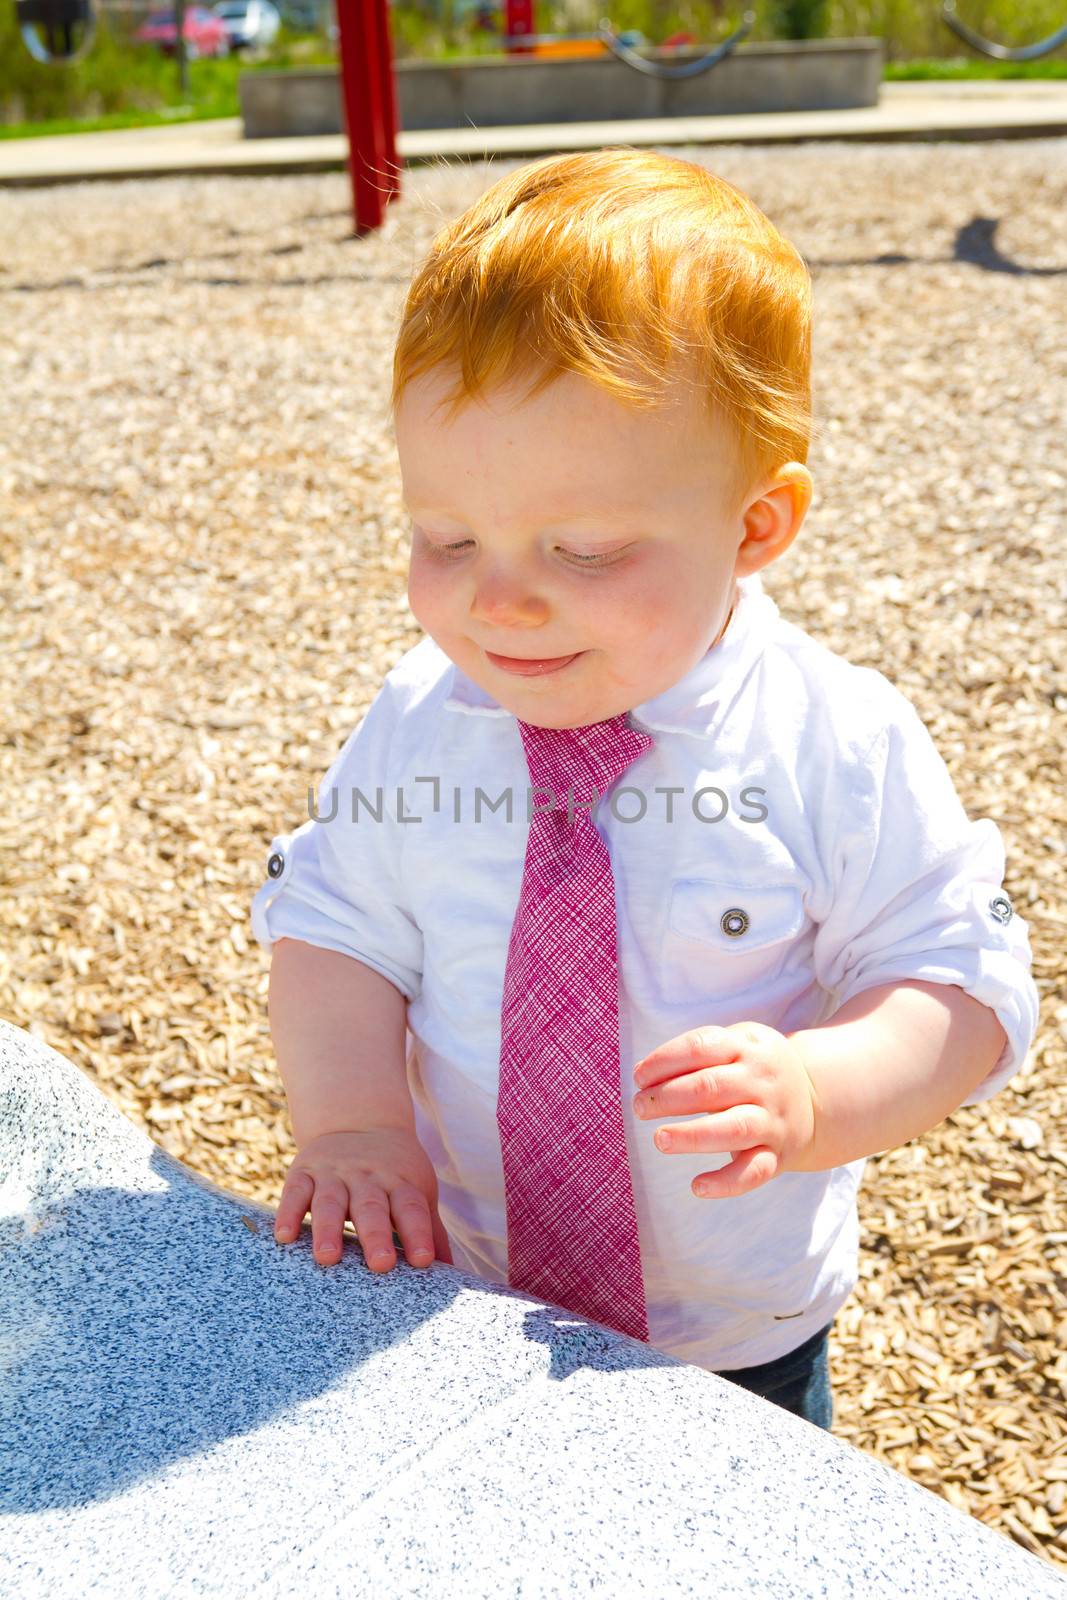 Baby Boy at Playground by joshuaraineyphotography